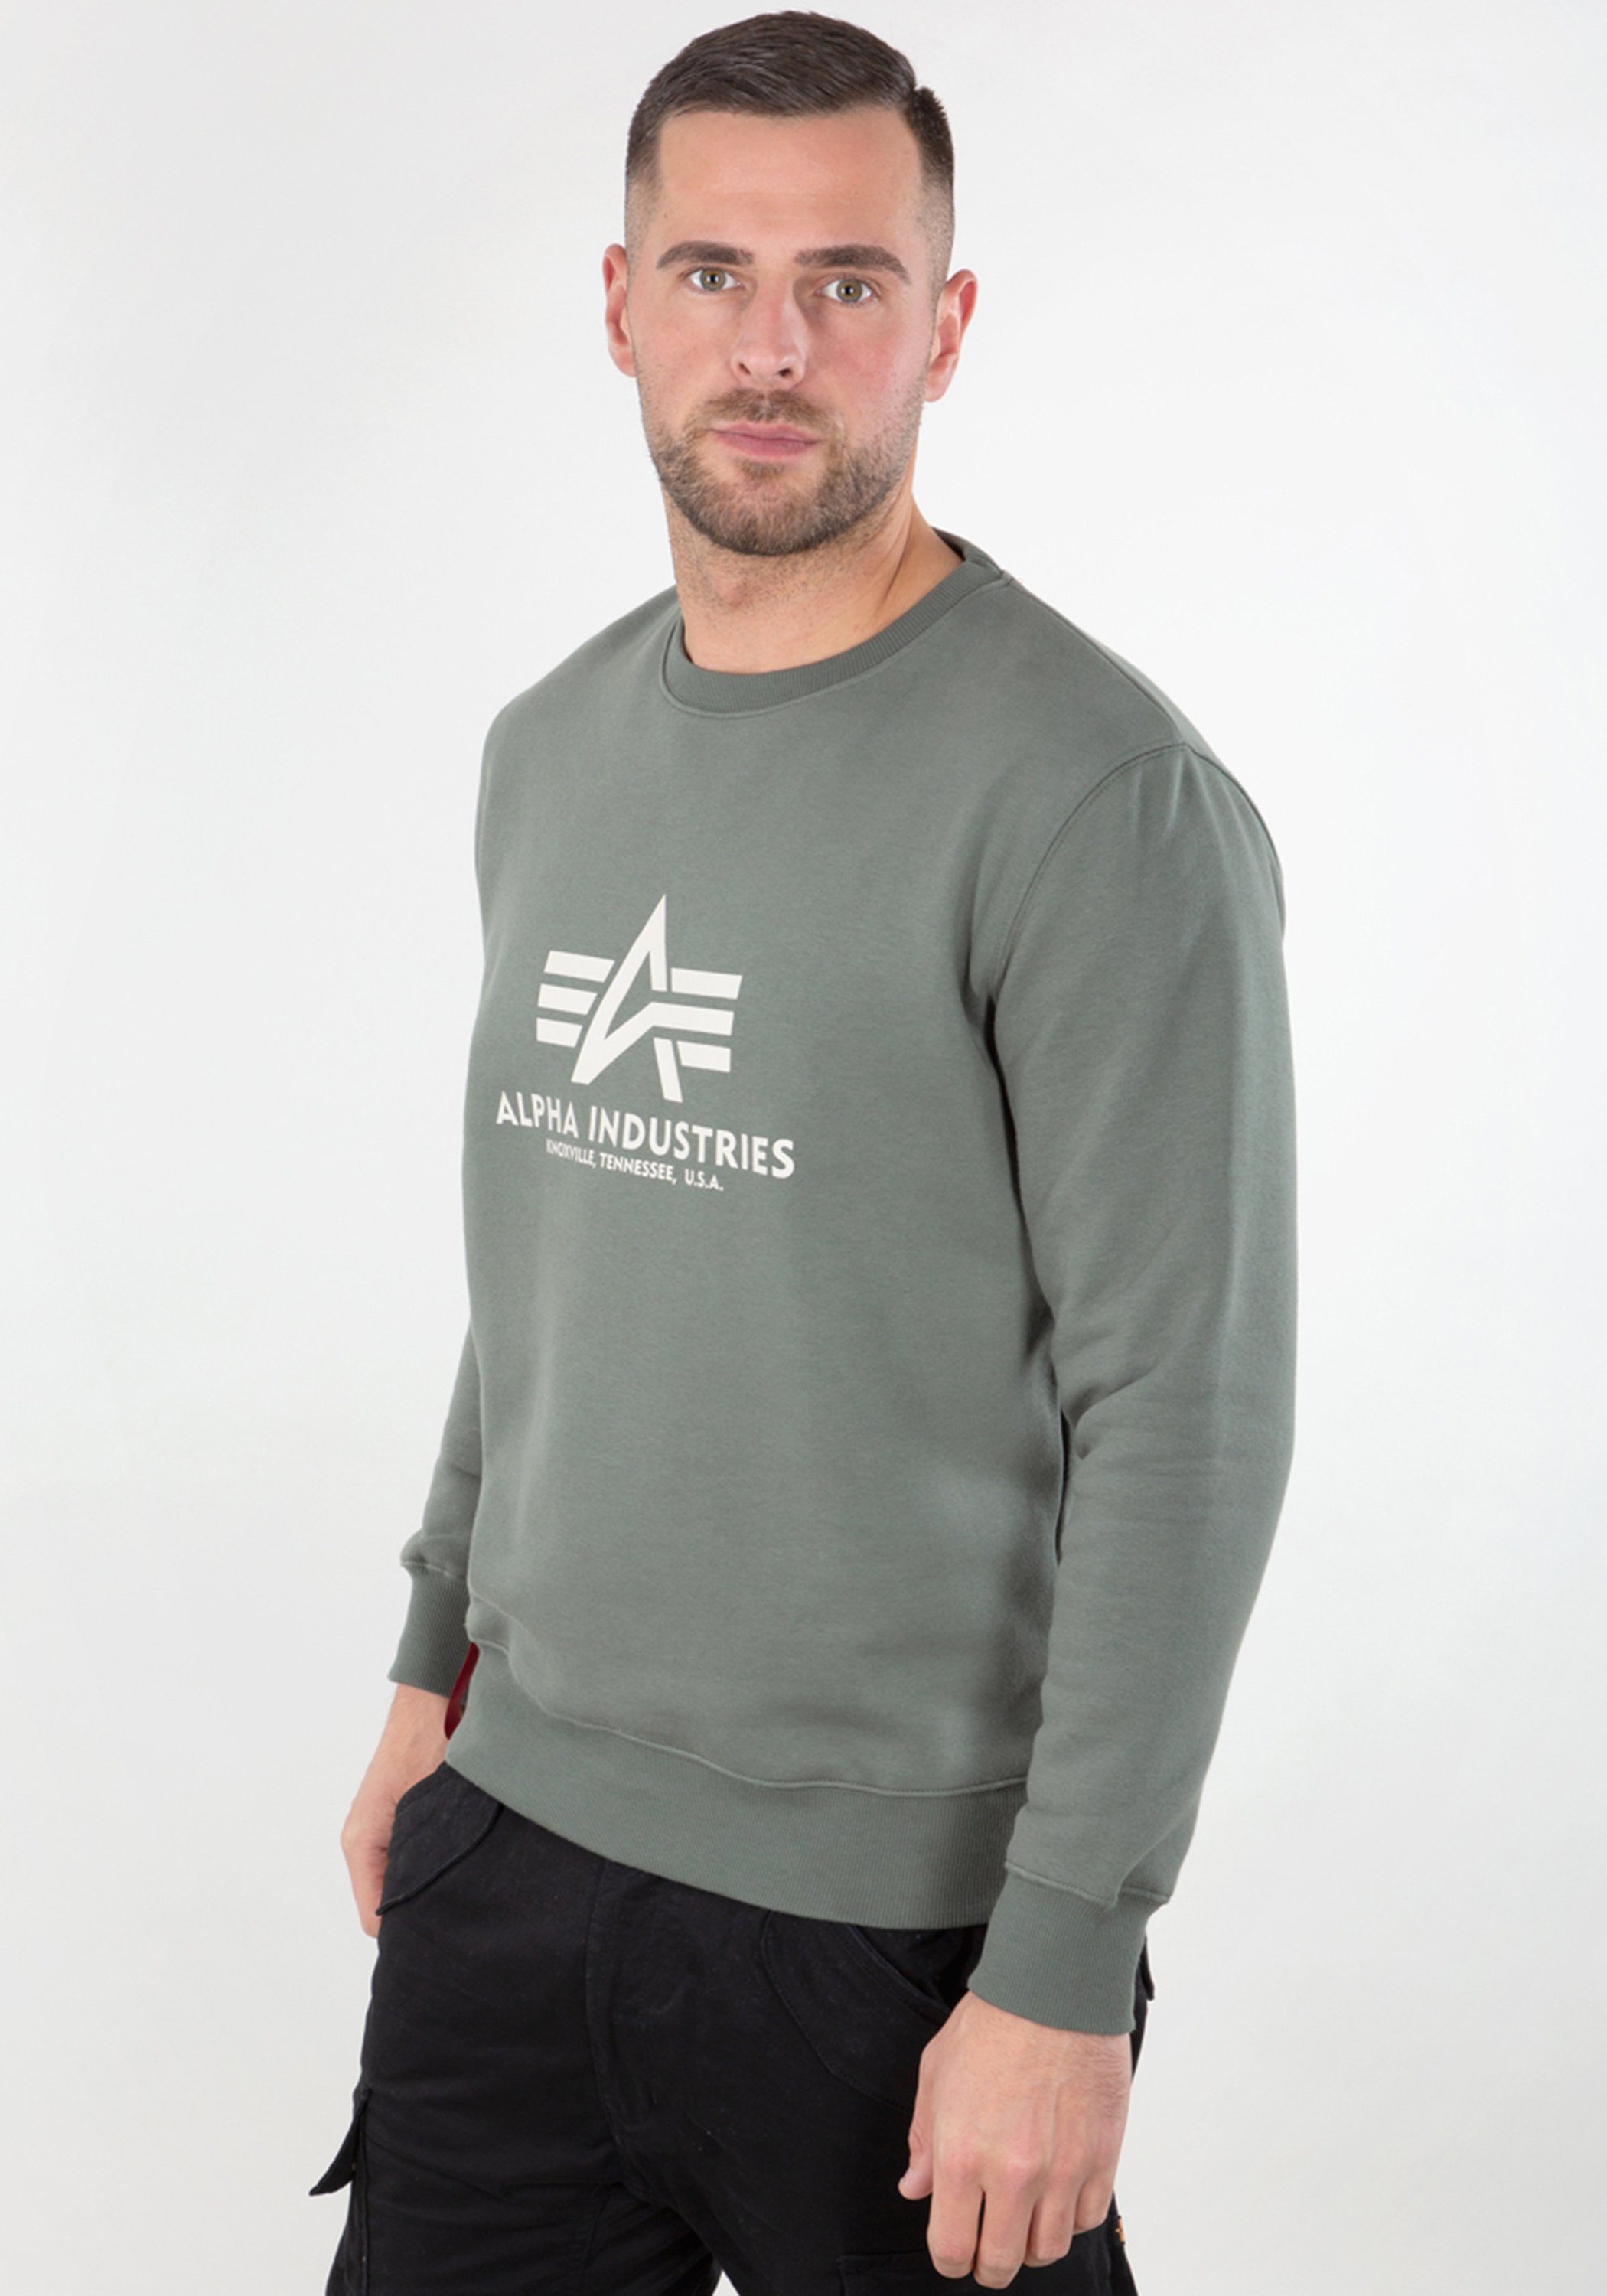 Industries Alpha Industries Alpha Sweatshirts Basic Sweater Sweater vintage - Men green